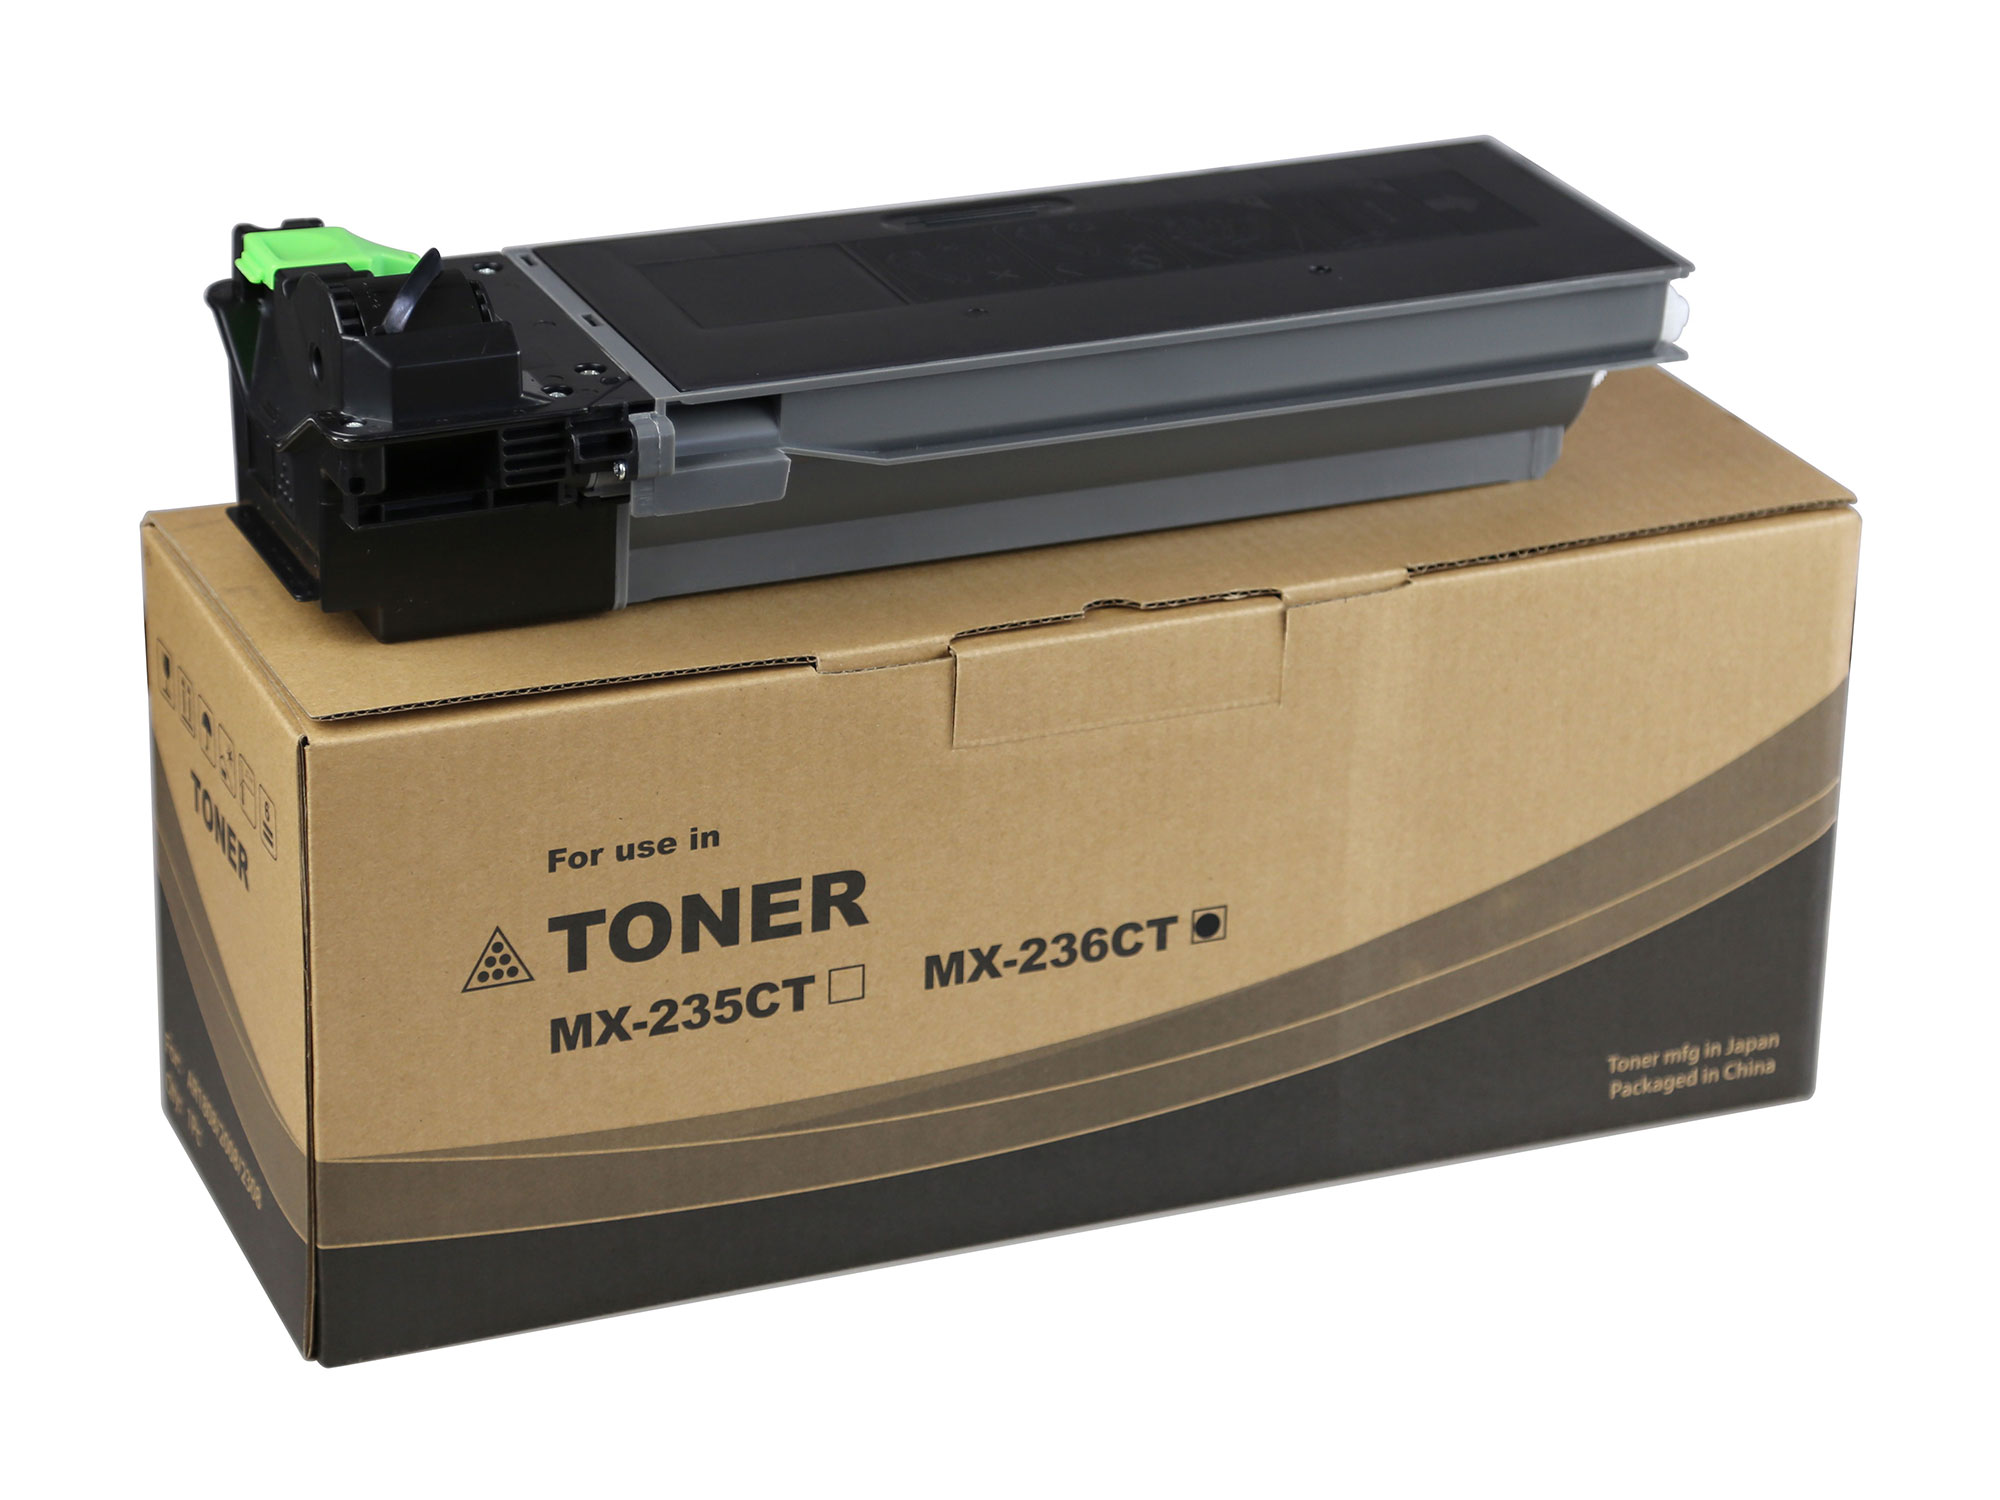 MX-236CT Toner Cartridge for Sharp AR1808